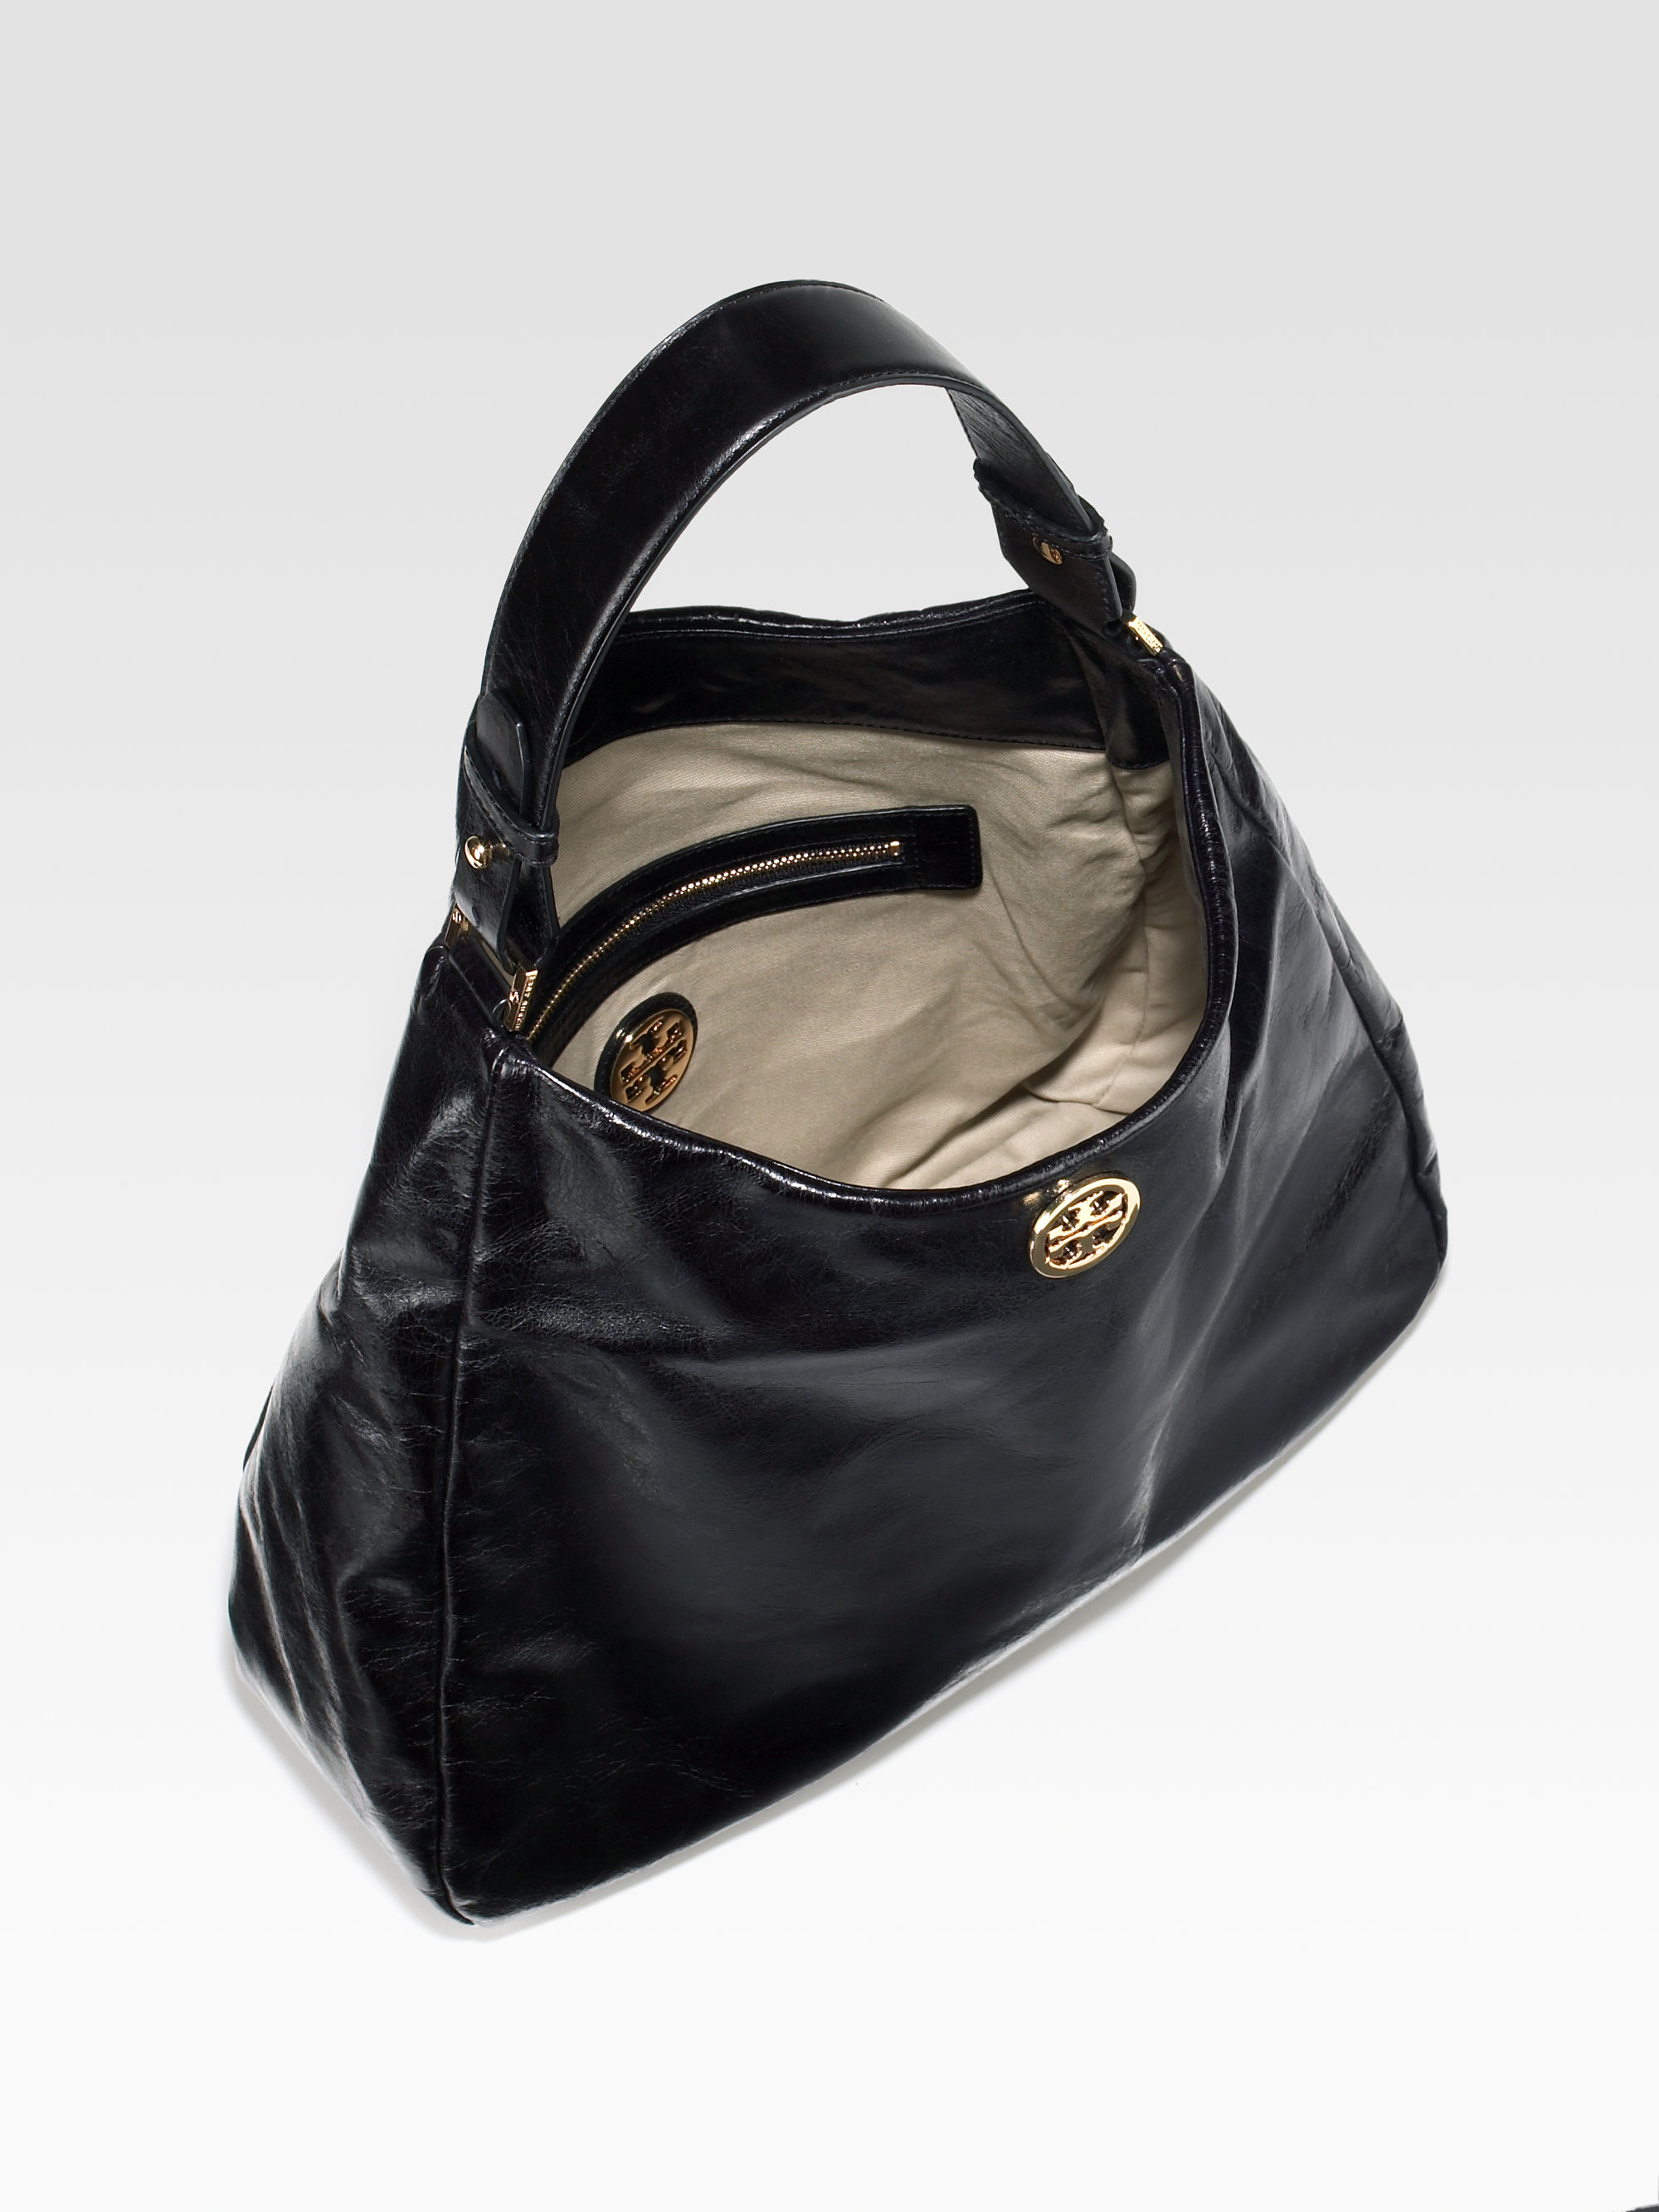 Lyst - Tory Burch Dena Glazed Leather Hobo Bag in Black